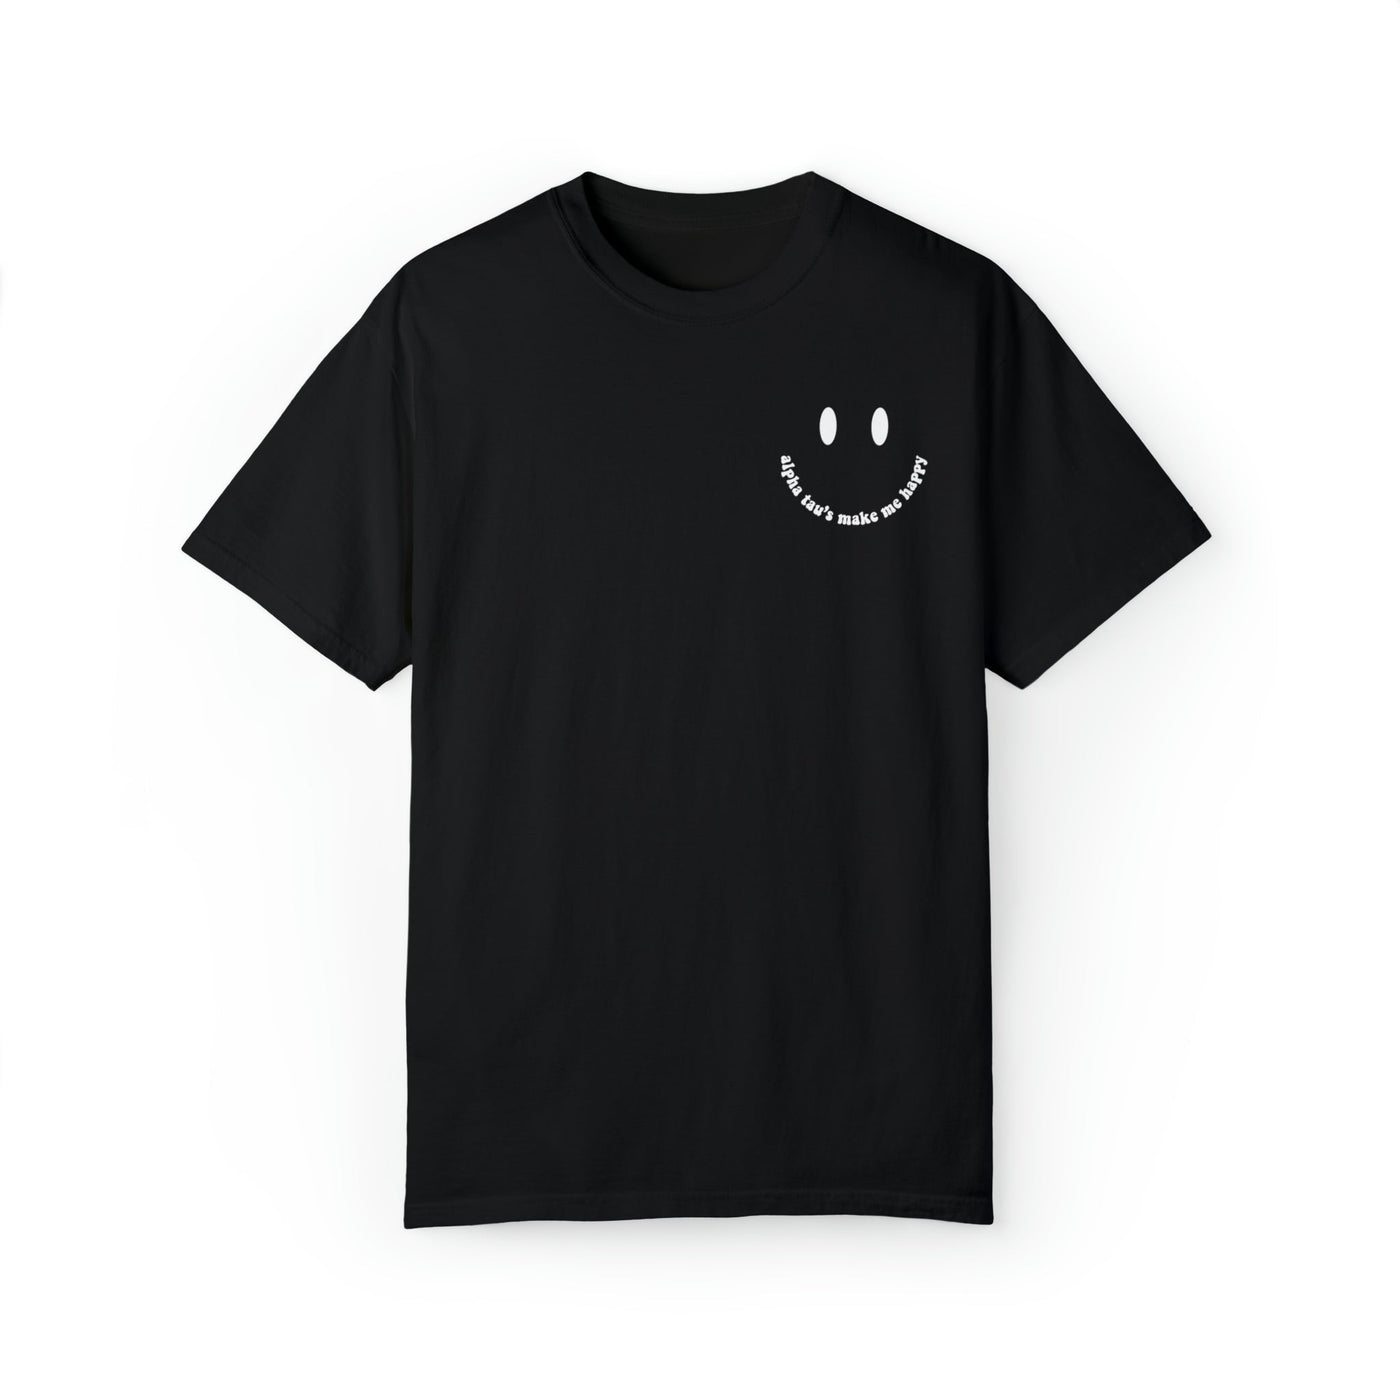 Alpha Sigma Tau's Make Me Happy Sorority Comfy T-shirt